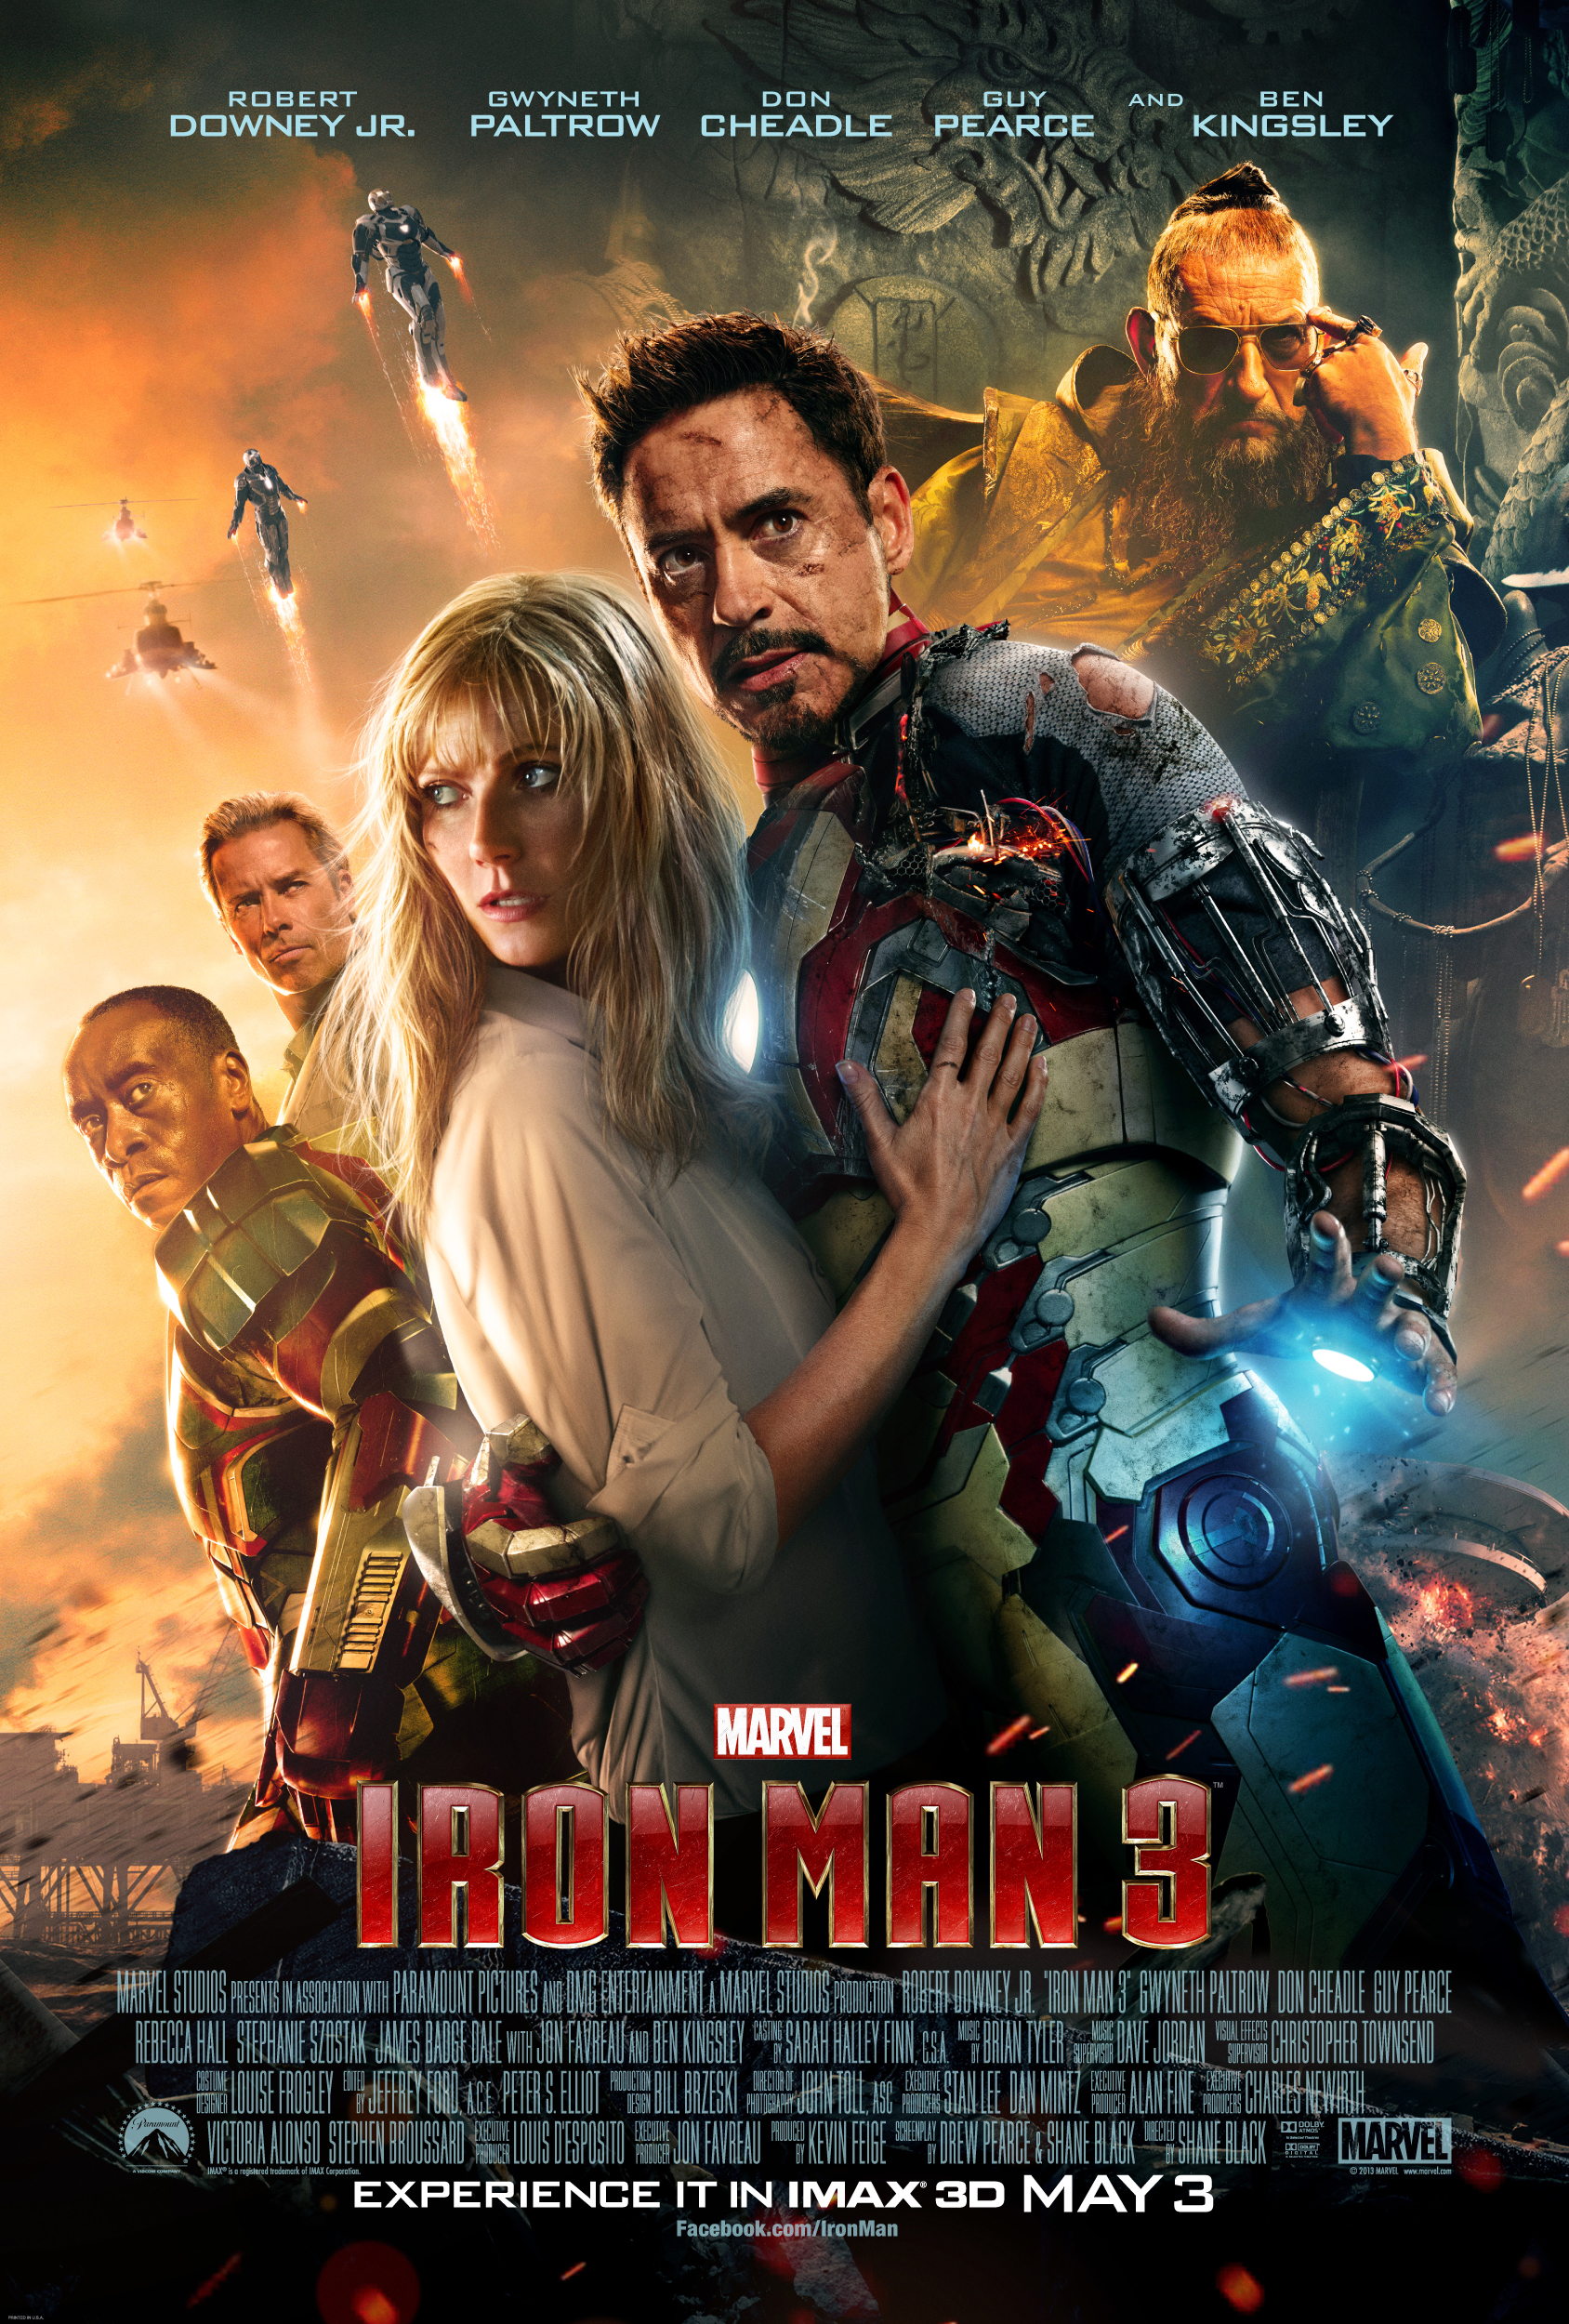 Iron Man 3 Movie Free Download Kickass